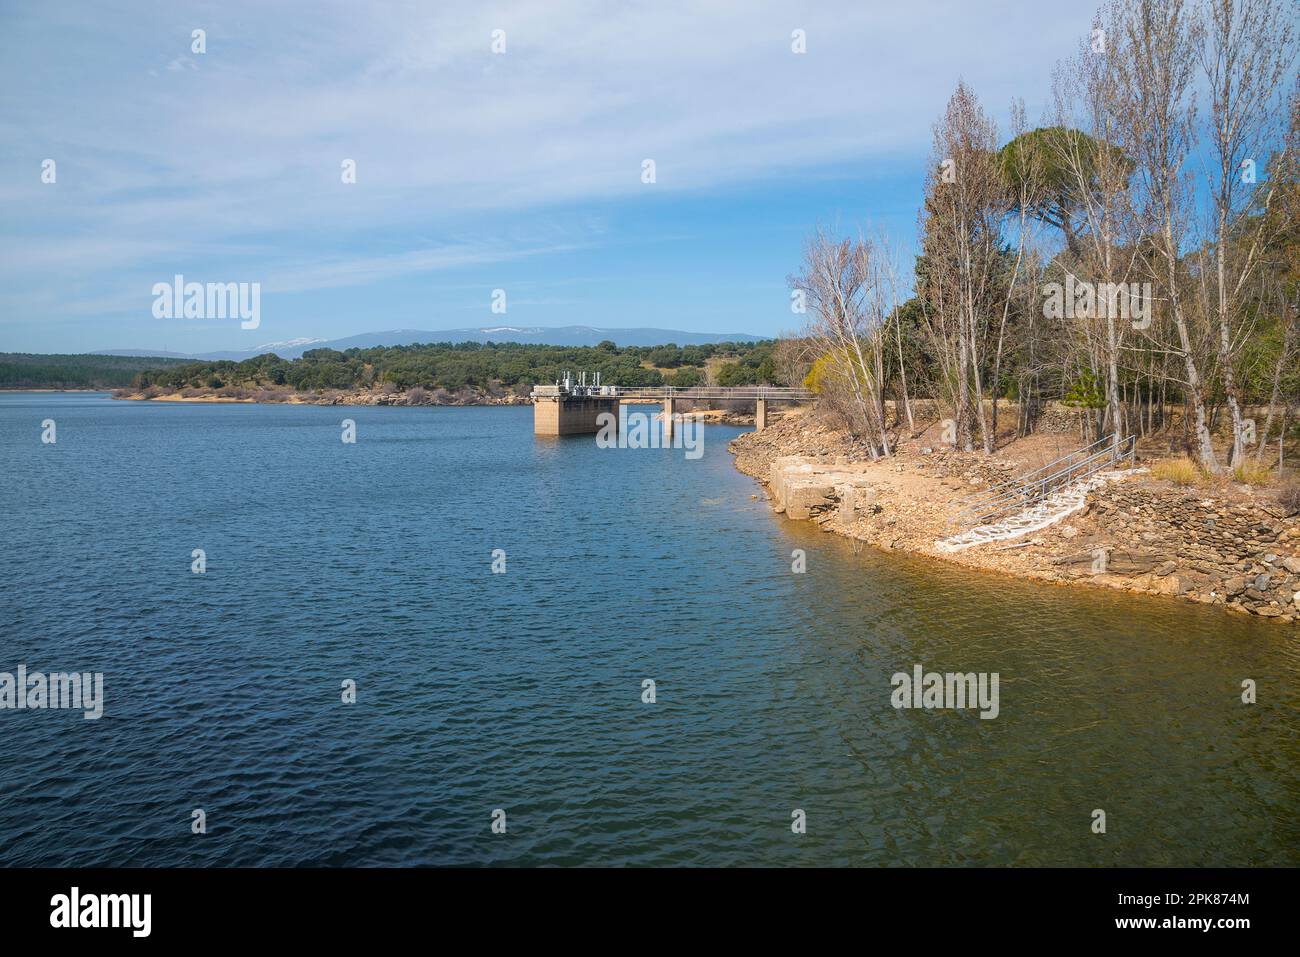 Puentes Viejas reservoir. Madrid province, Spain. Stock Photo